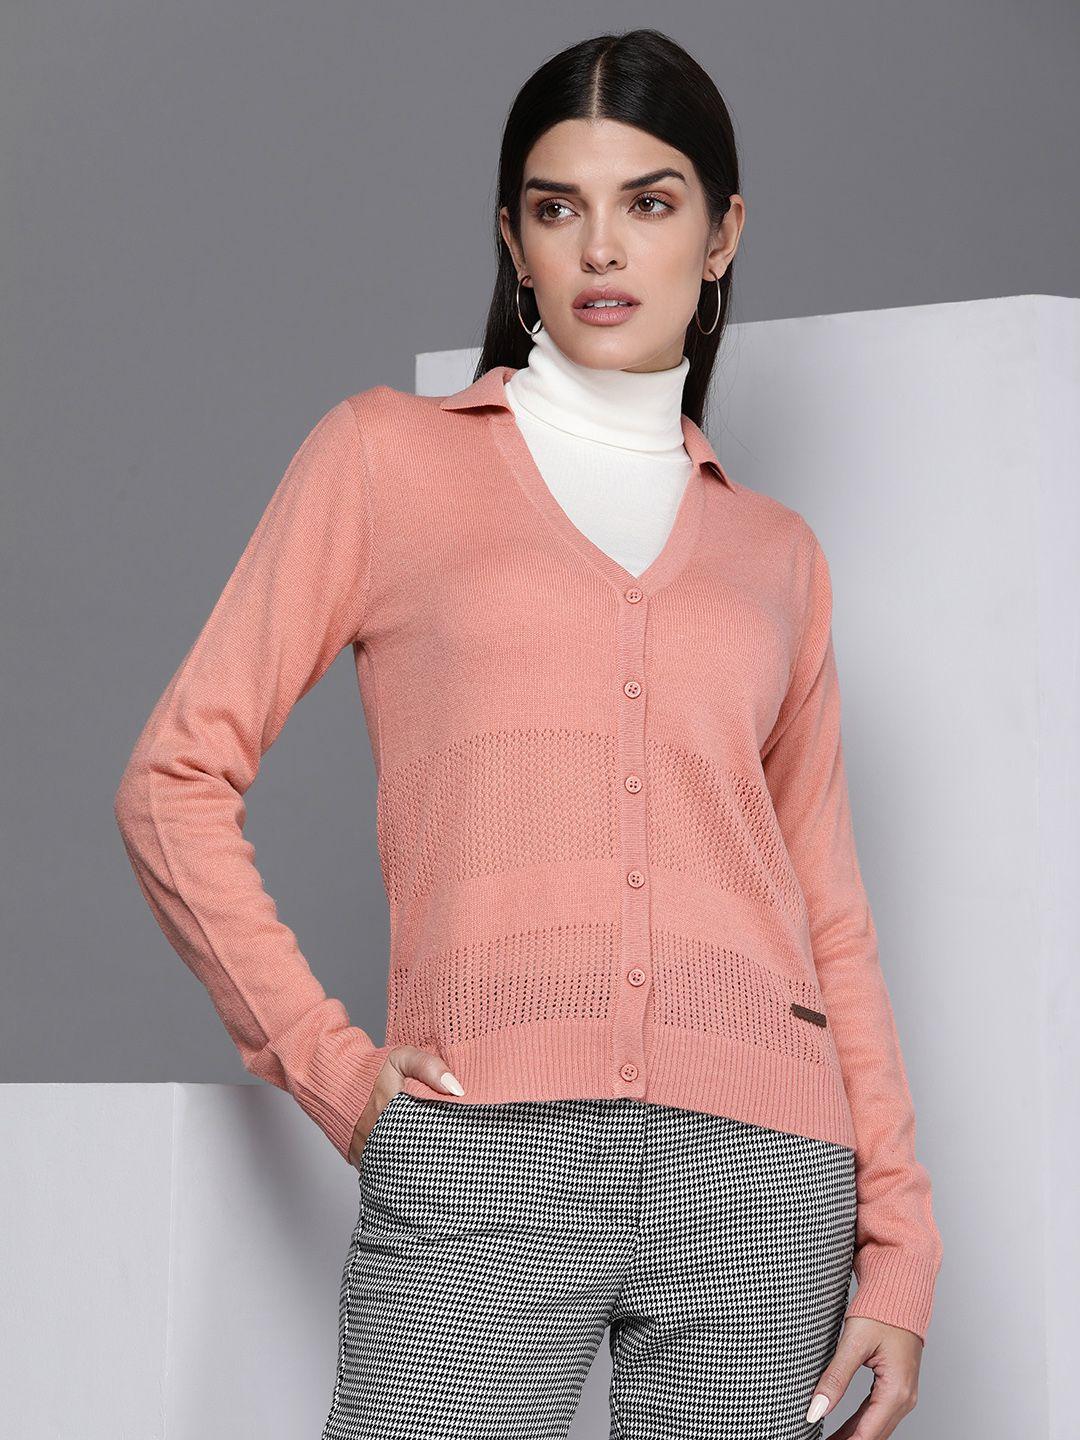 kenneth-cole-deft-women-peach-coloured-open-knit-cardigan-sweater